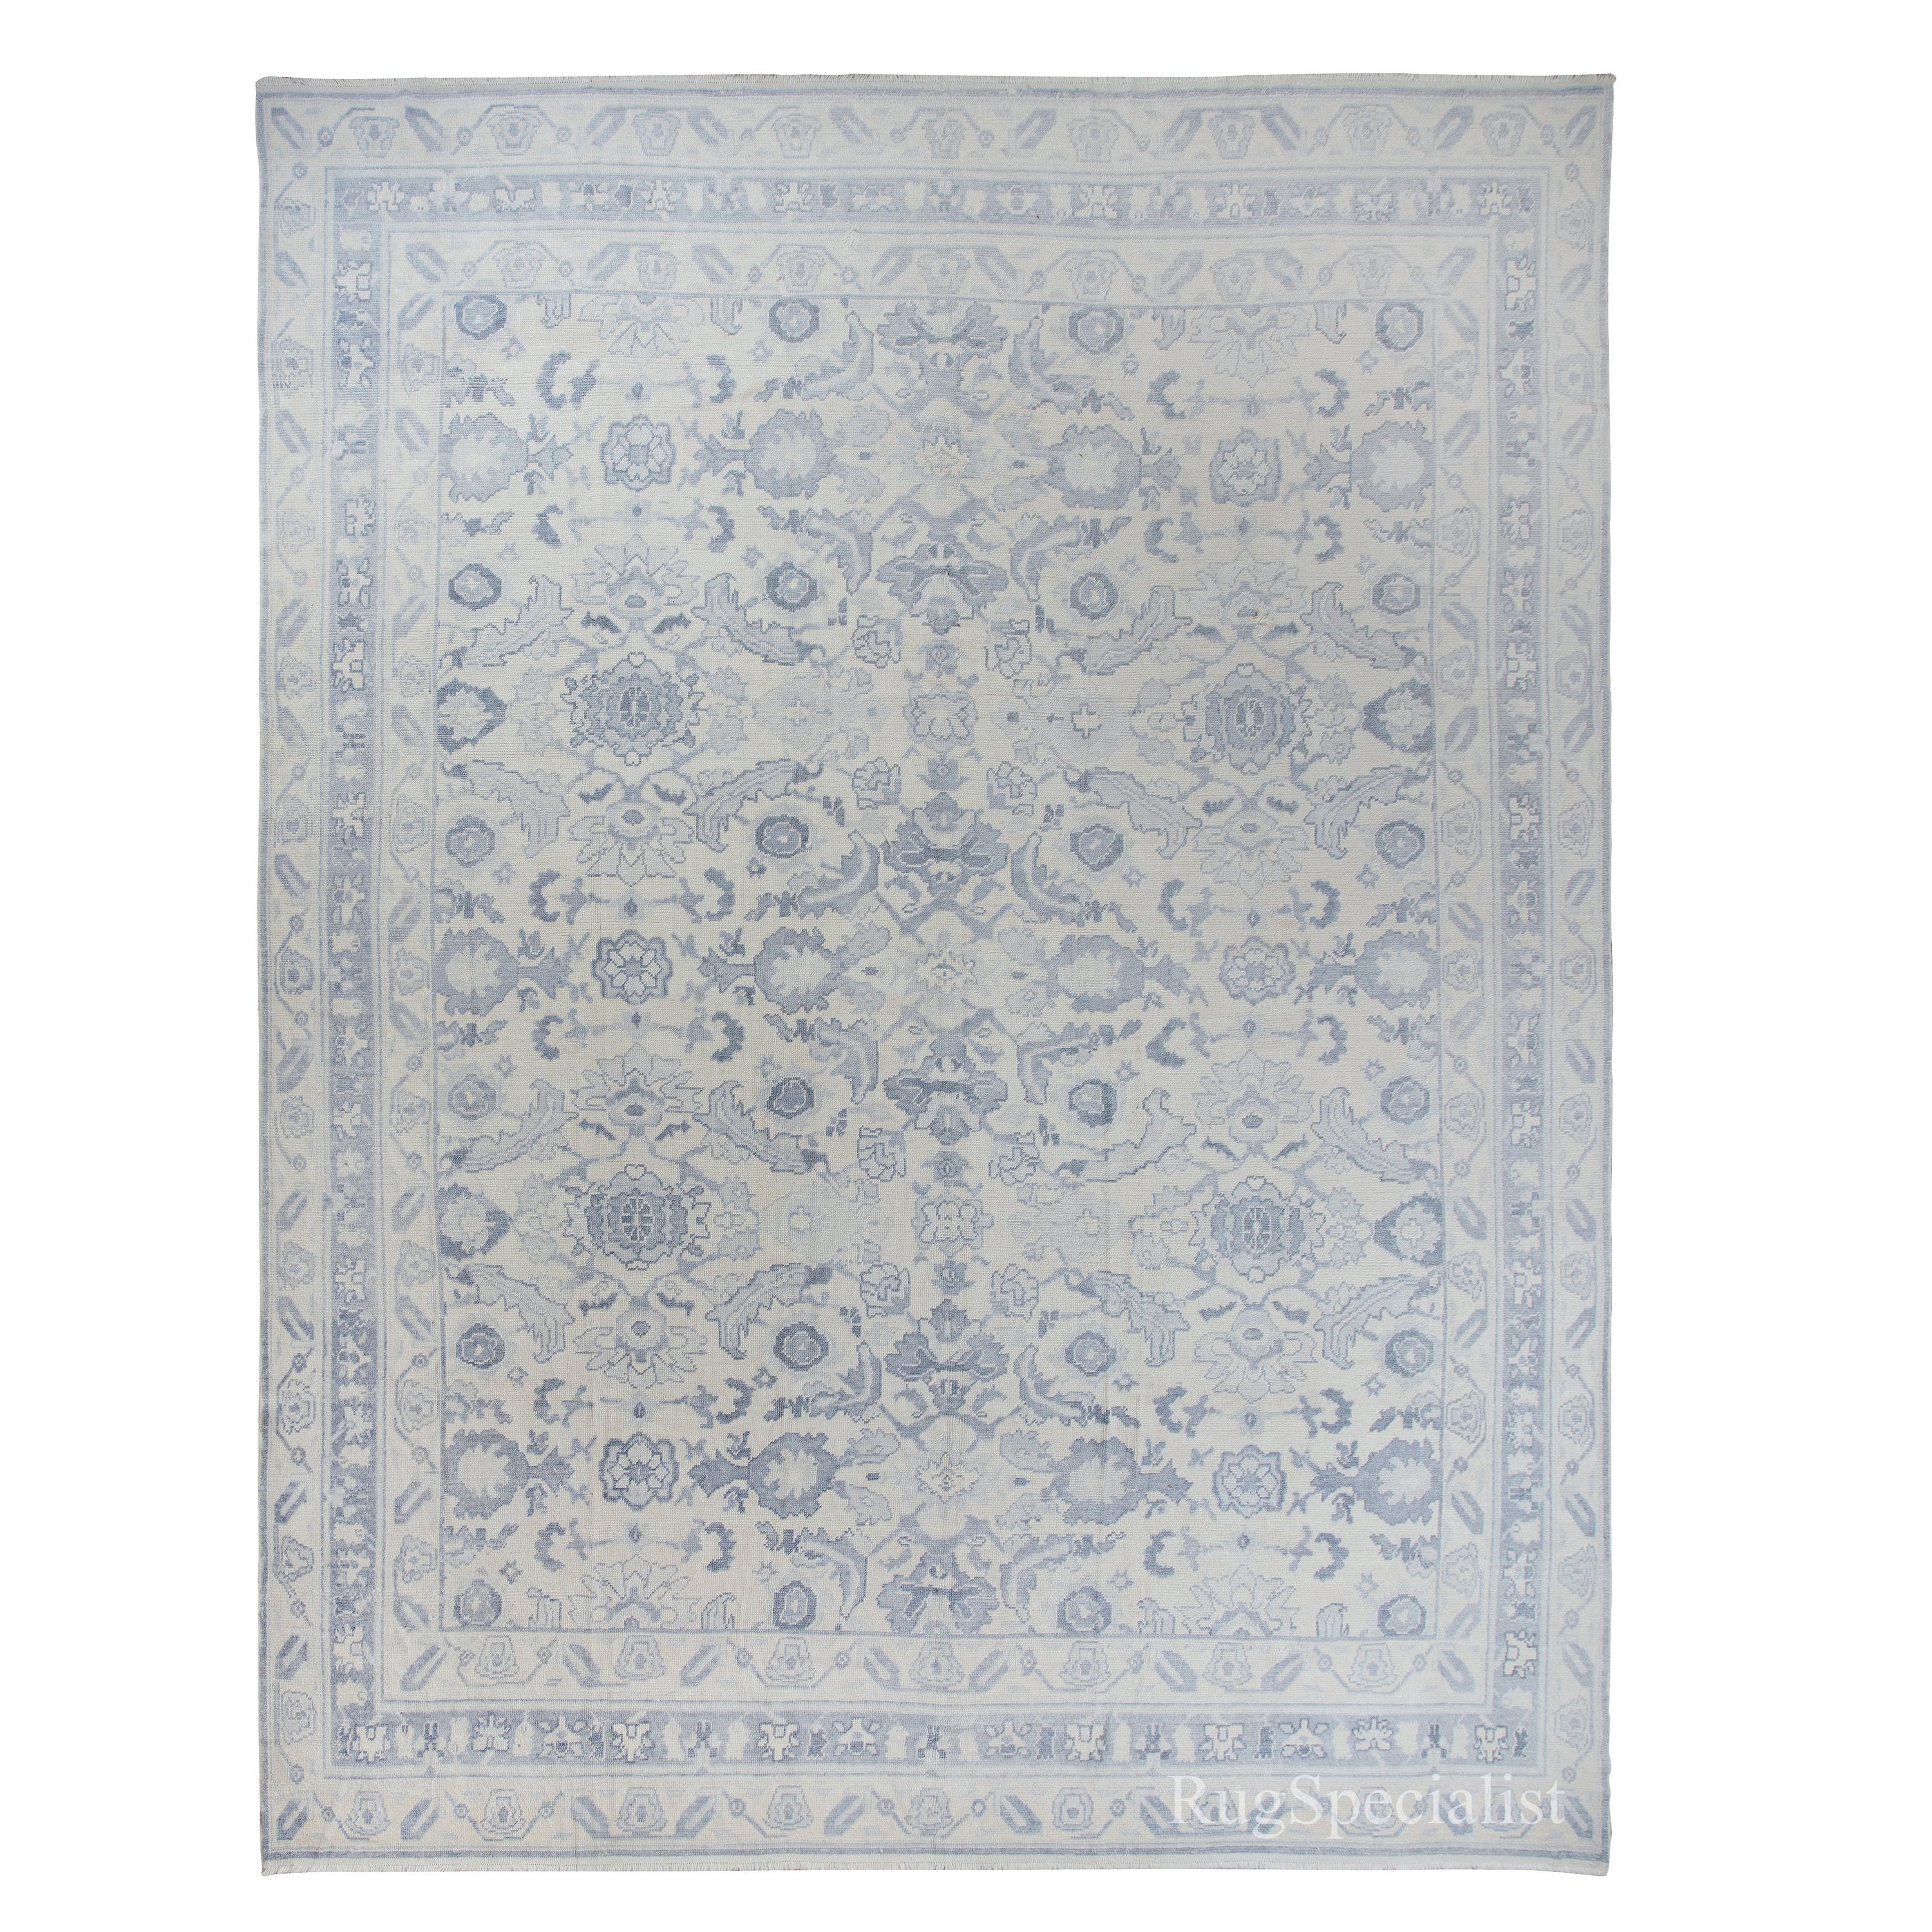 13.8x17 Ft New Turkish Oushak Wool Rug, Hand-Knotted Turkey, Oversize Carpet